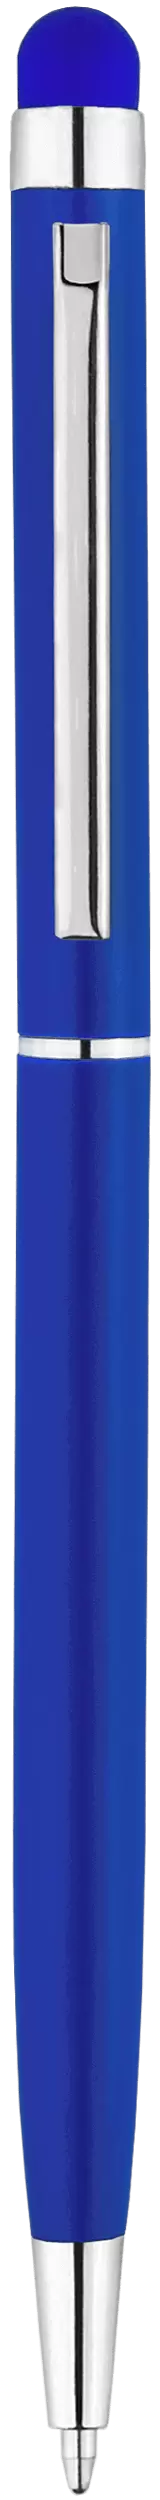 Ручка KENO Синяя 1117-01